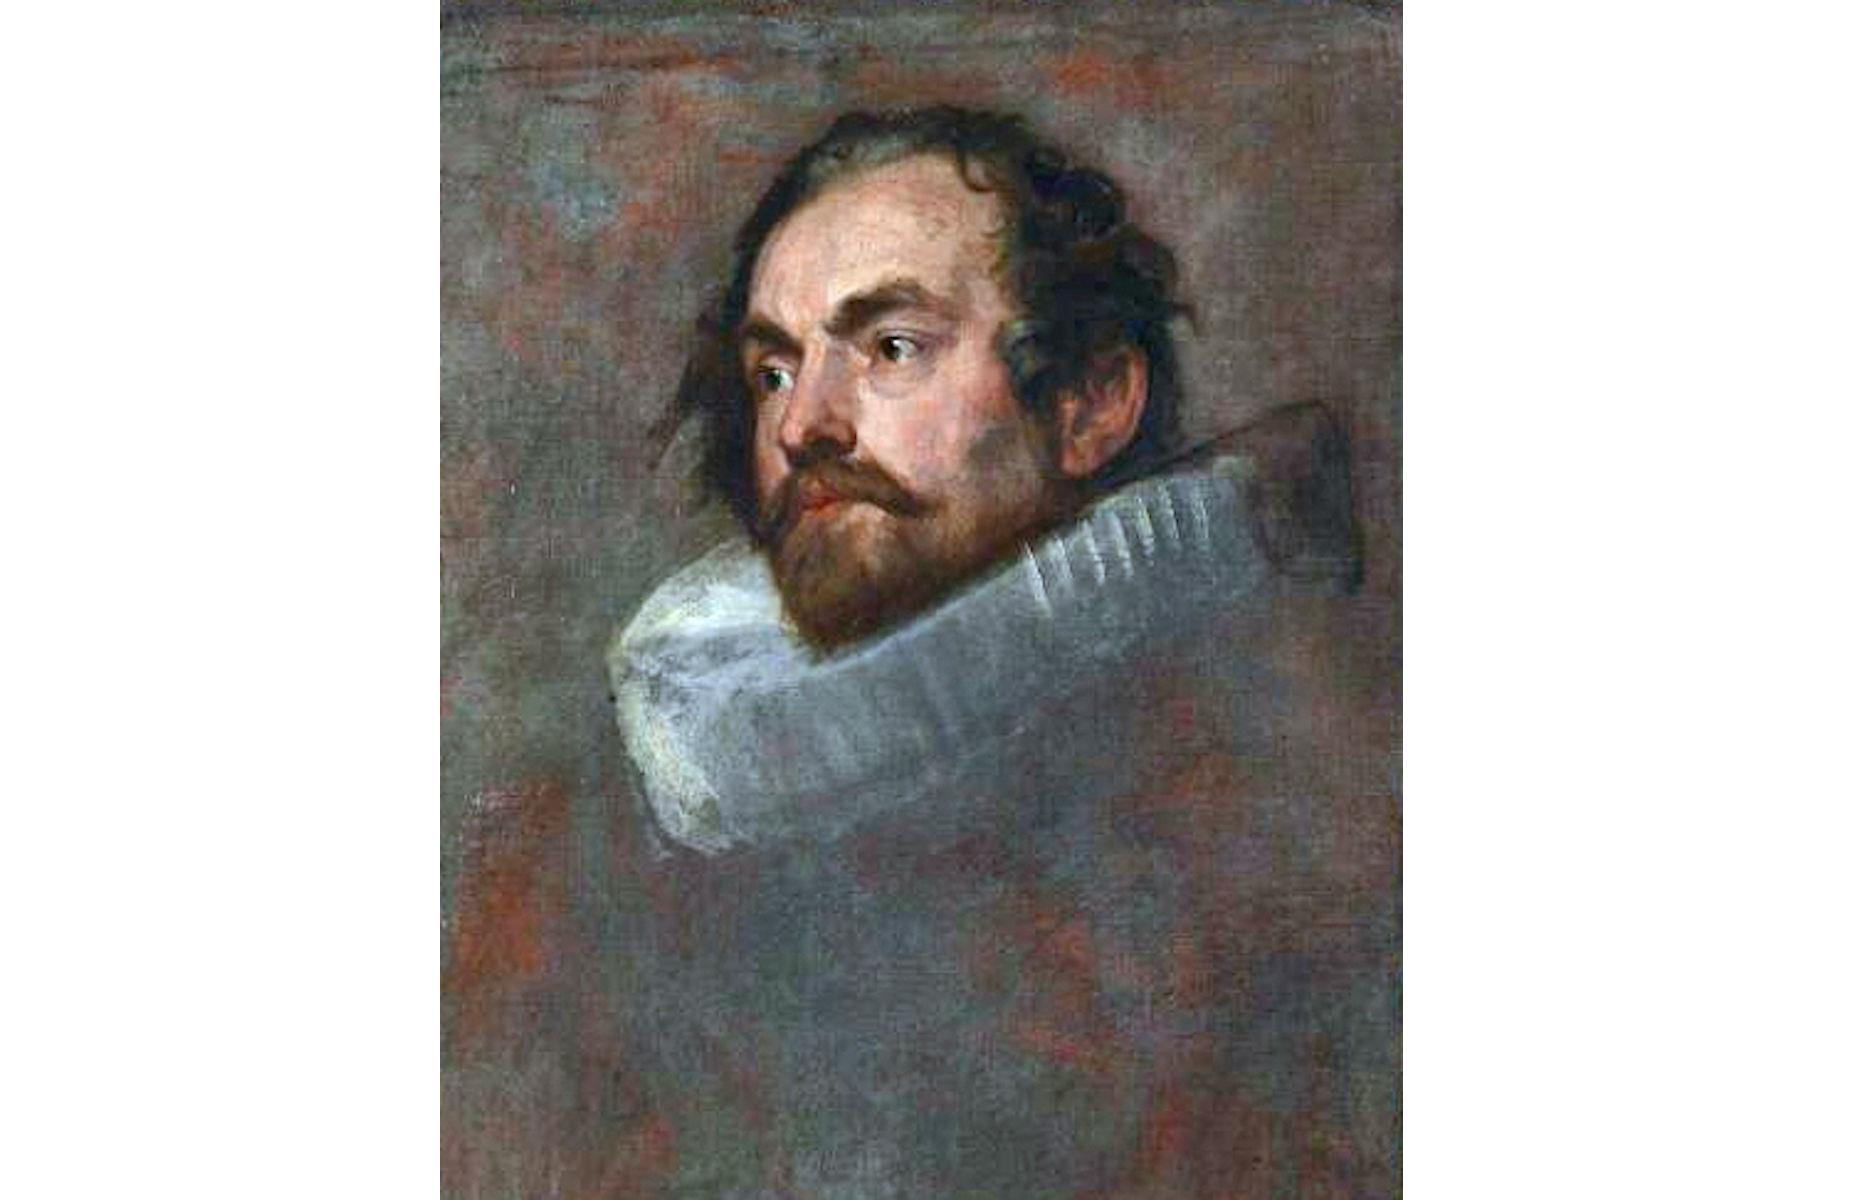 The Van Dyck sketch worth $520,000 (£400k)